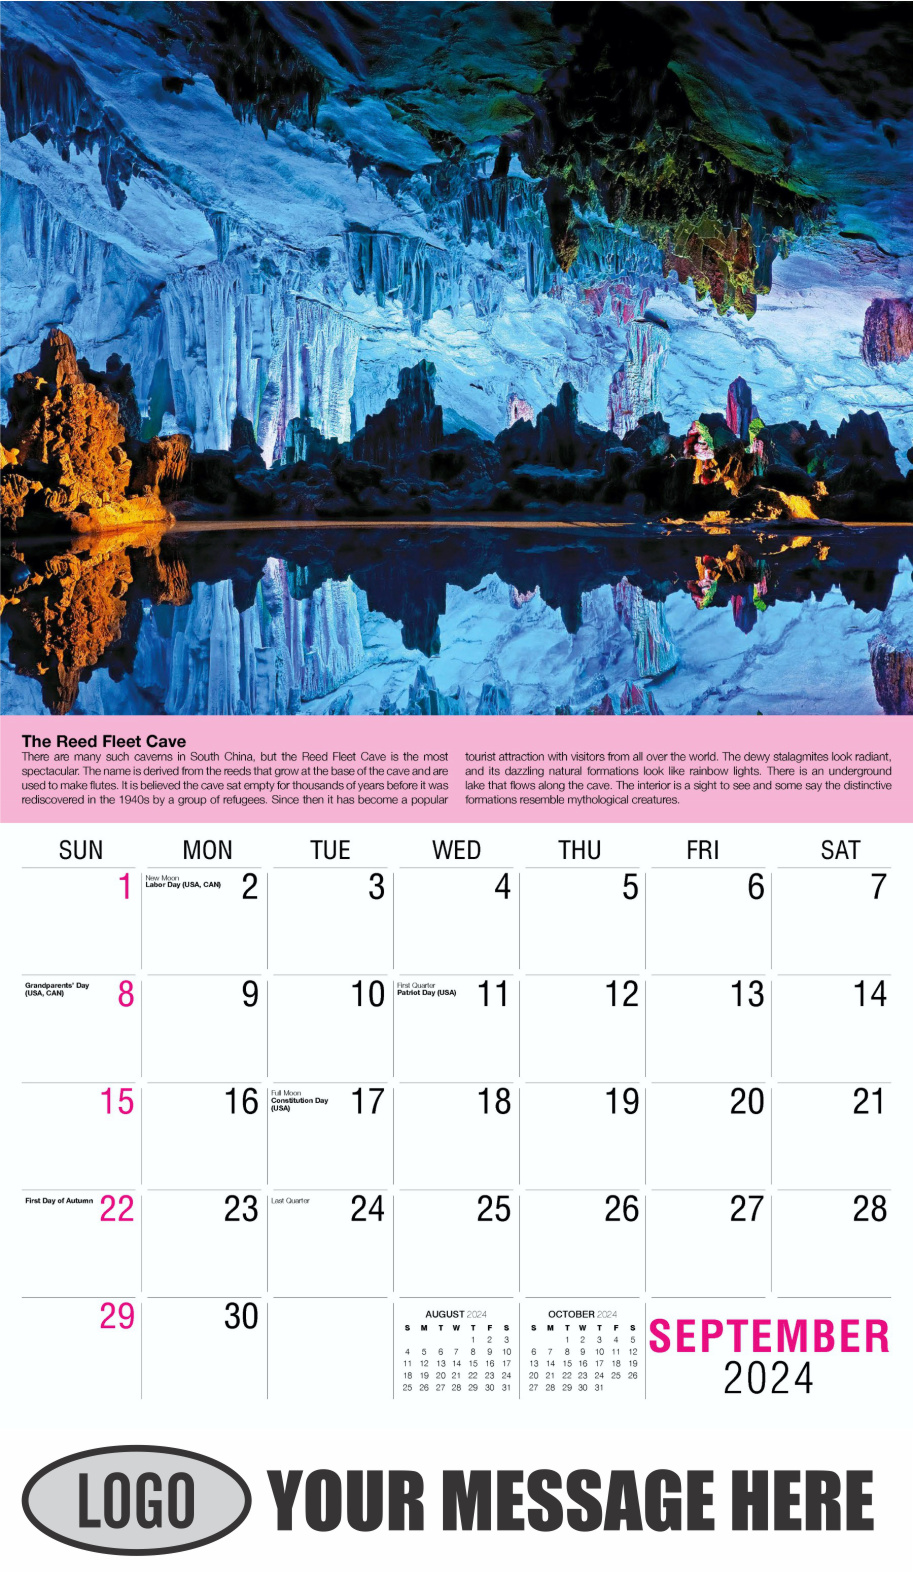 Planet Earth 2024 Business Promotional Wall Calendar - September